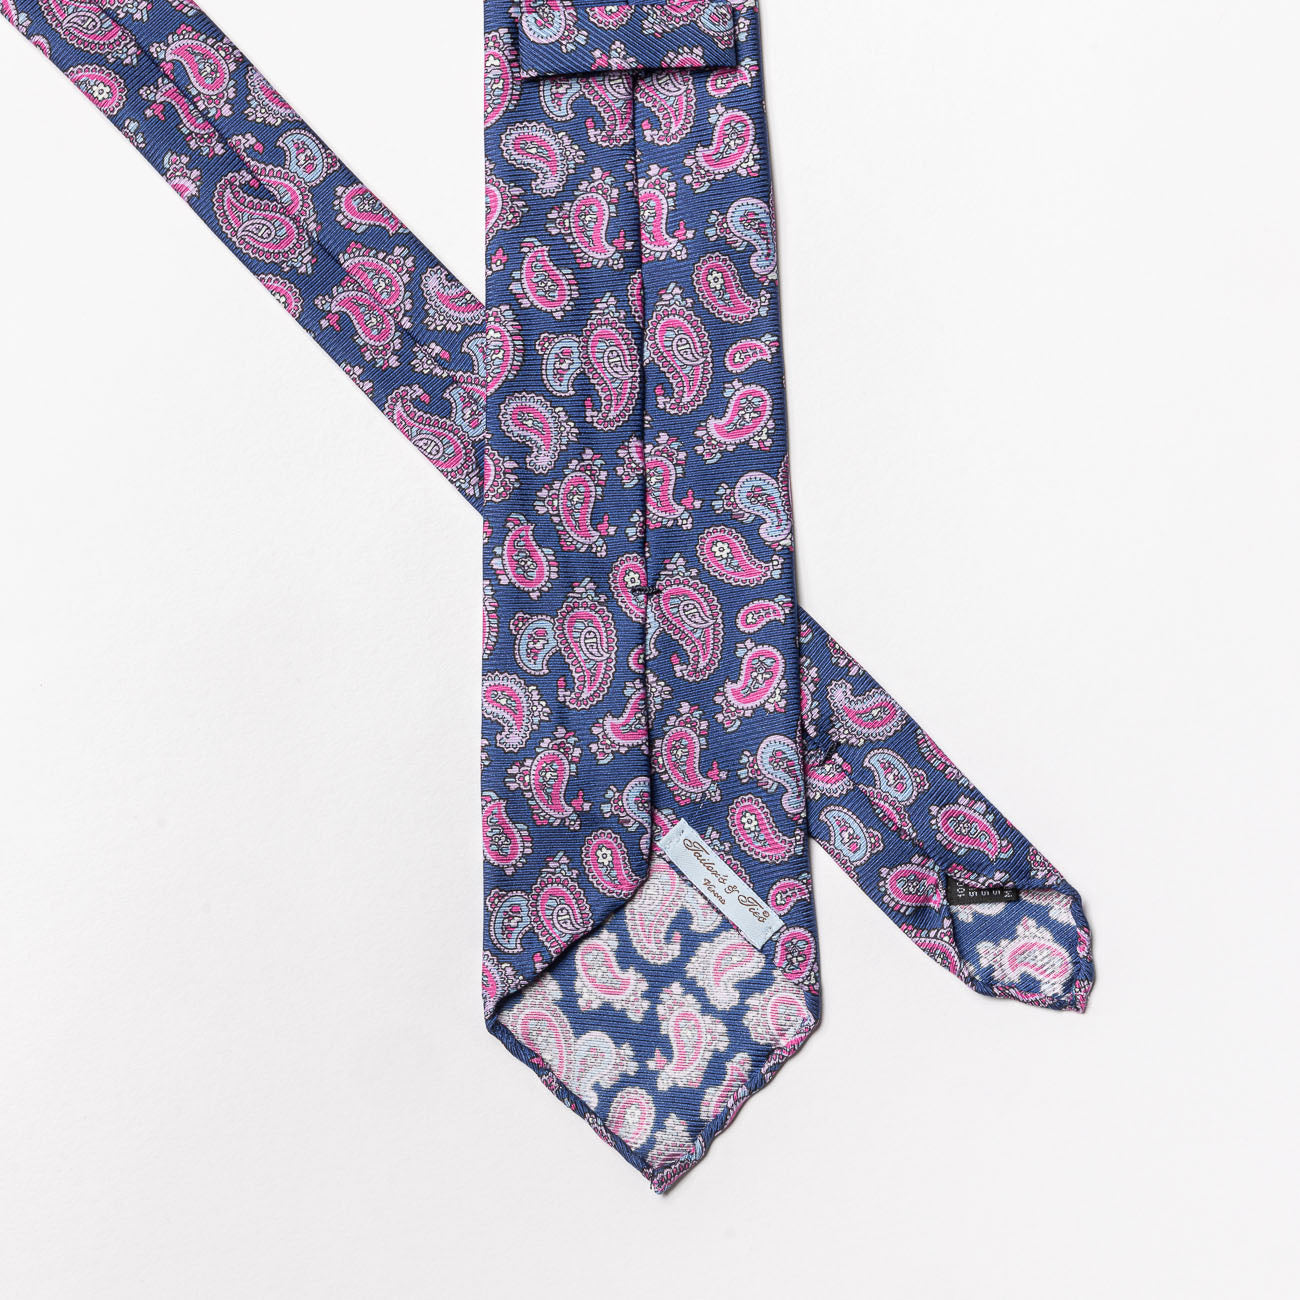 Cravatta sfoderata Tailor’s and Ties in seta viola